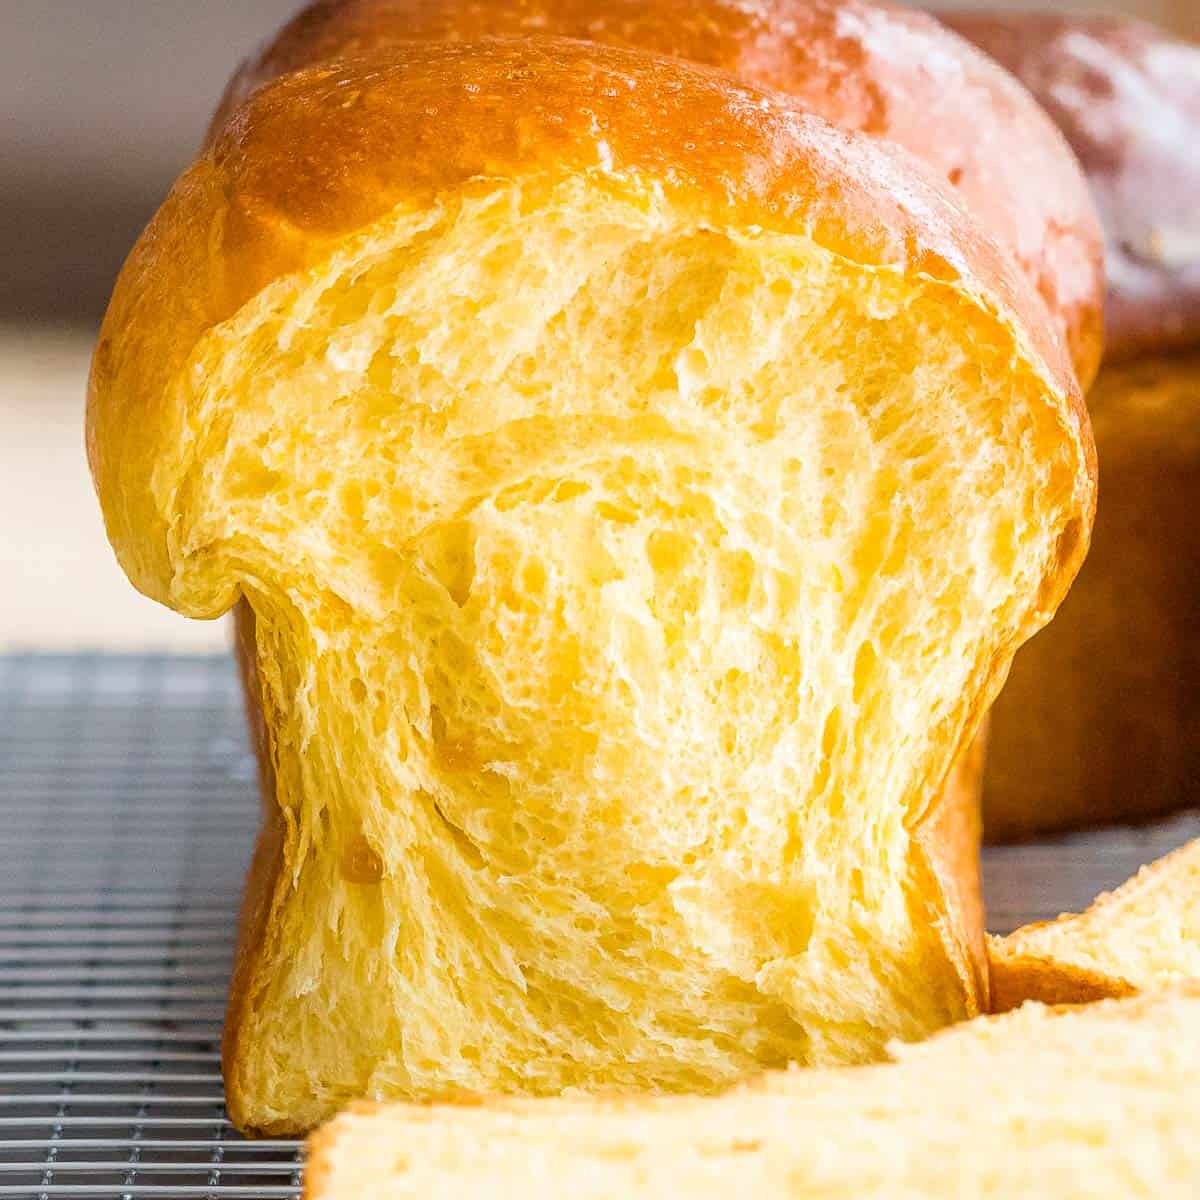 Pumpkin sourdough bread with soft, fluffy interior and golden brown crust.